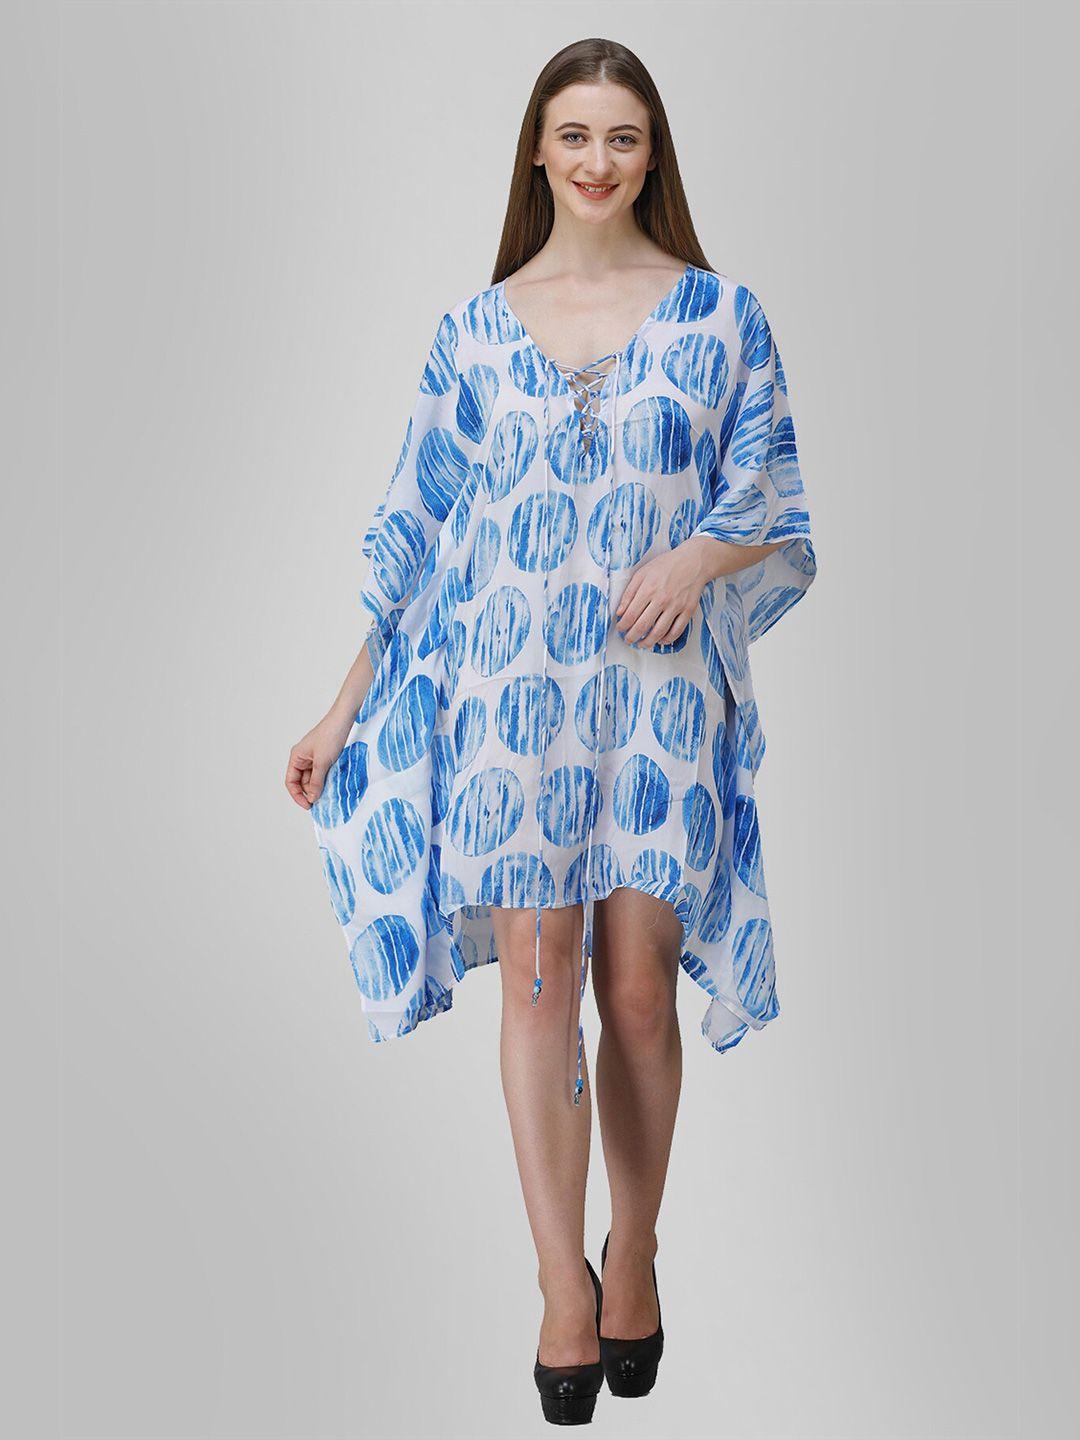 rajoria instyle blue & white georgette kaftan dress